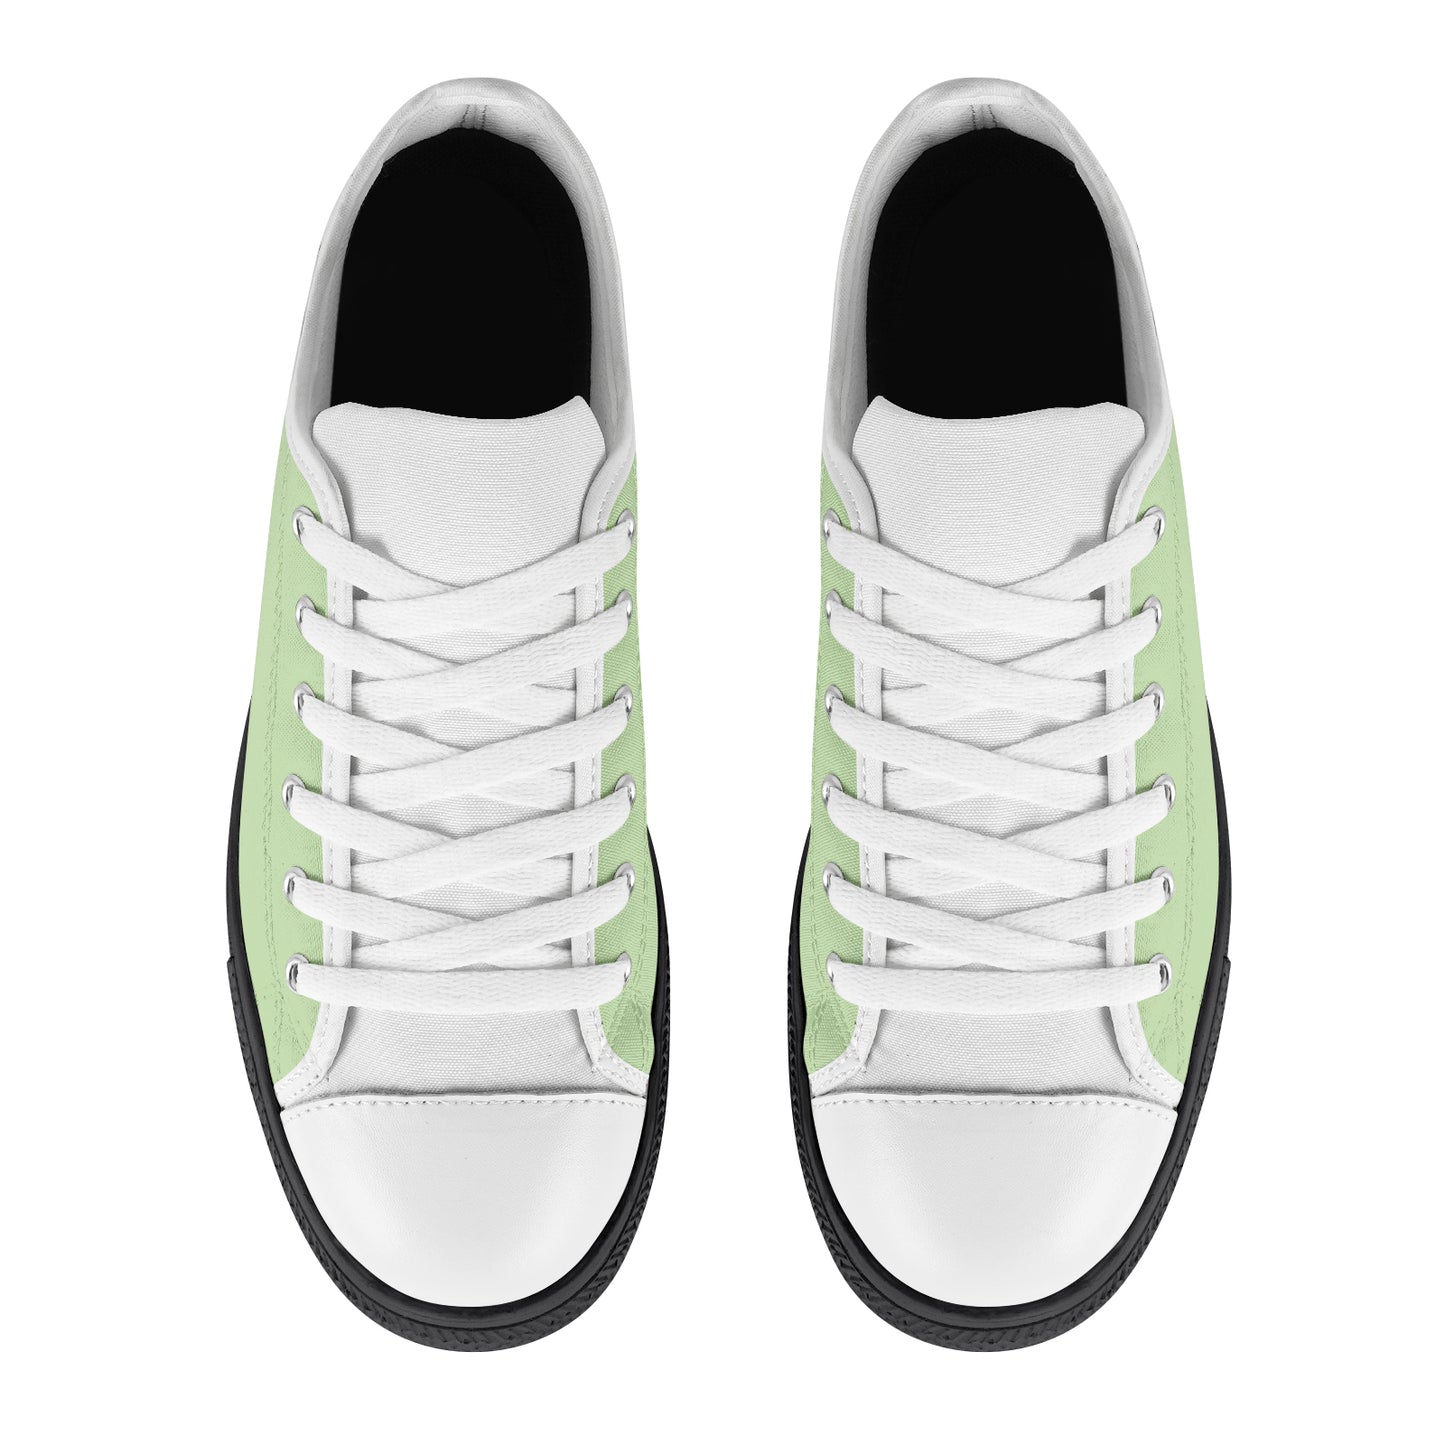 Women's Canvas Sneakers - Light Green